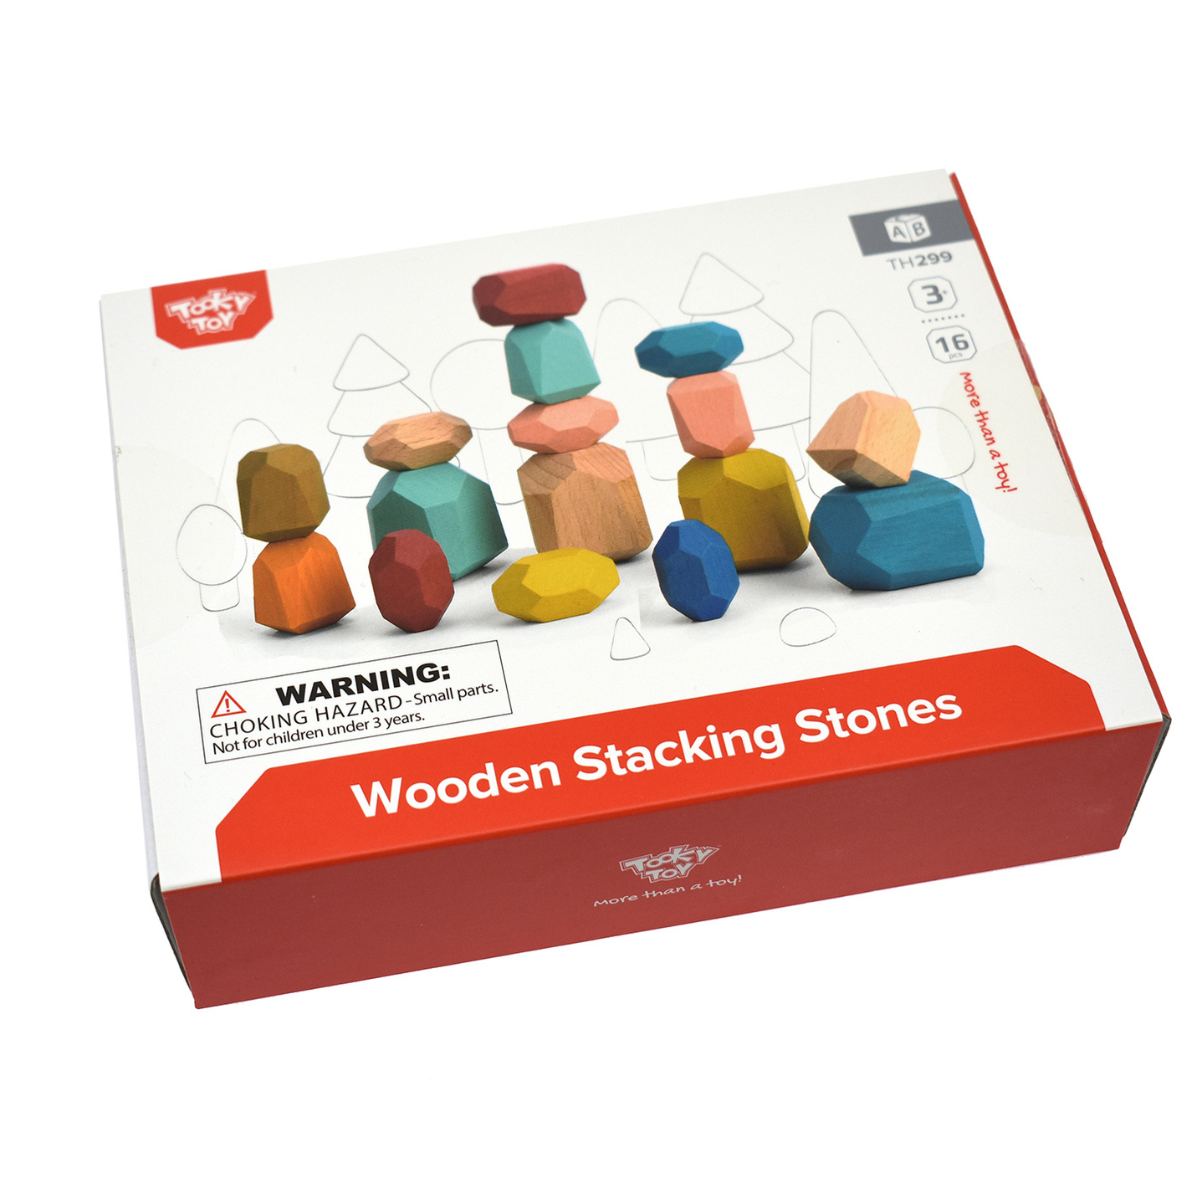 Wooden Stacking Stone Blocks